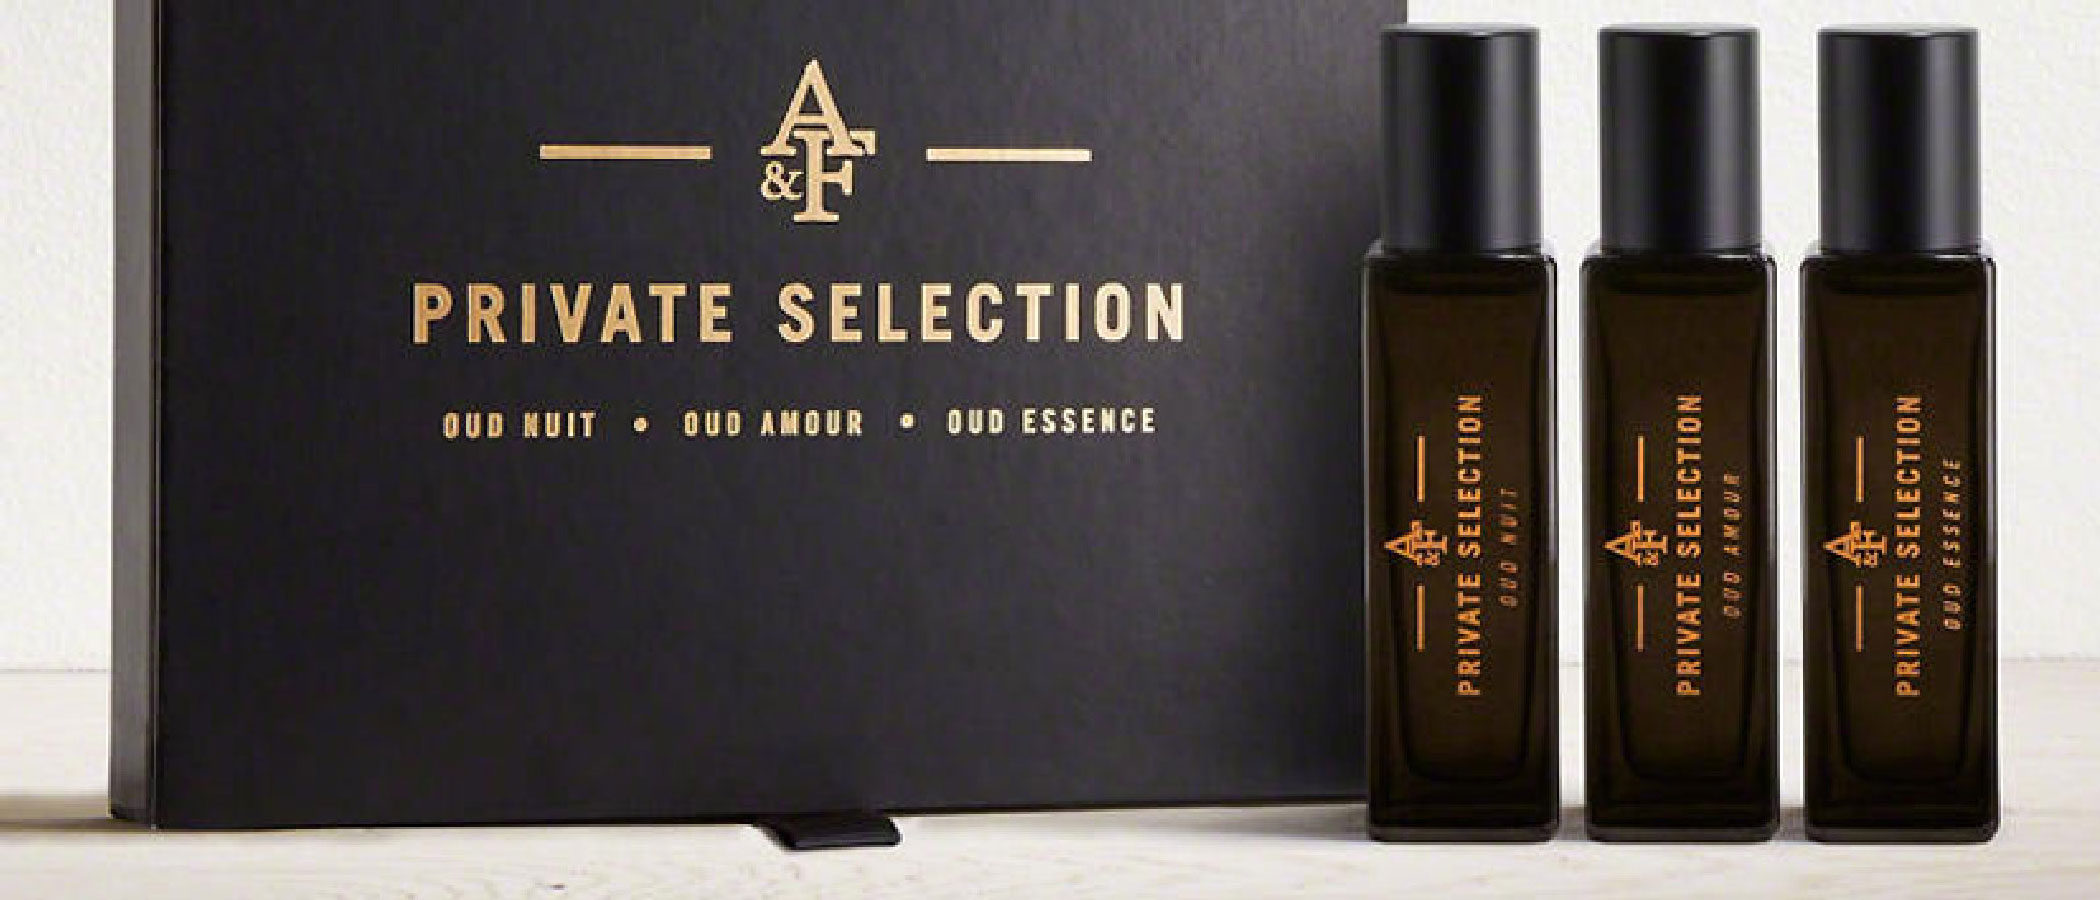 Abercrombie & Fitch lanza su nueva línea de fragancias 'Private Selection'